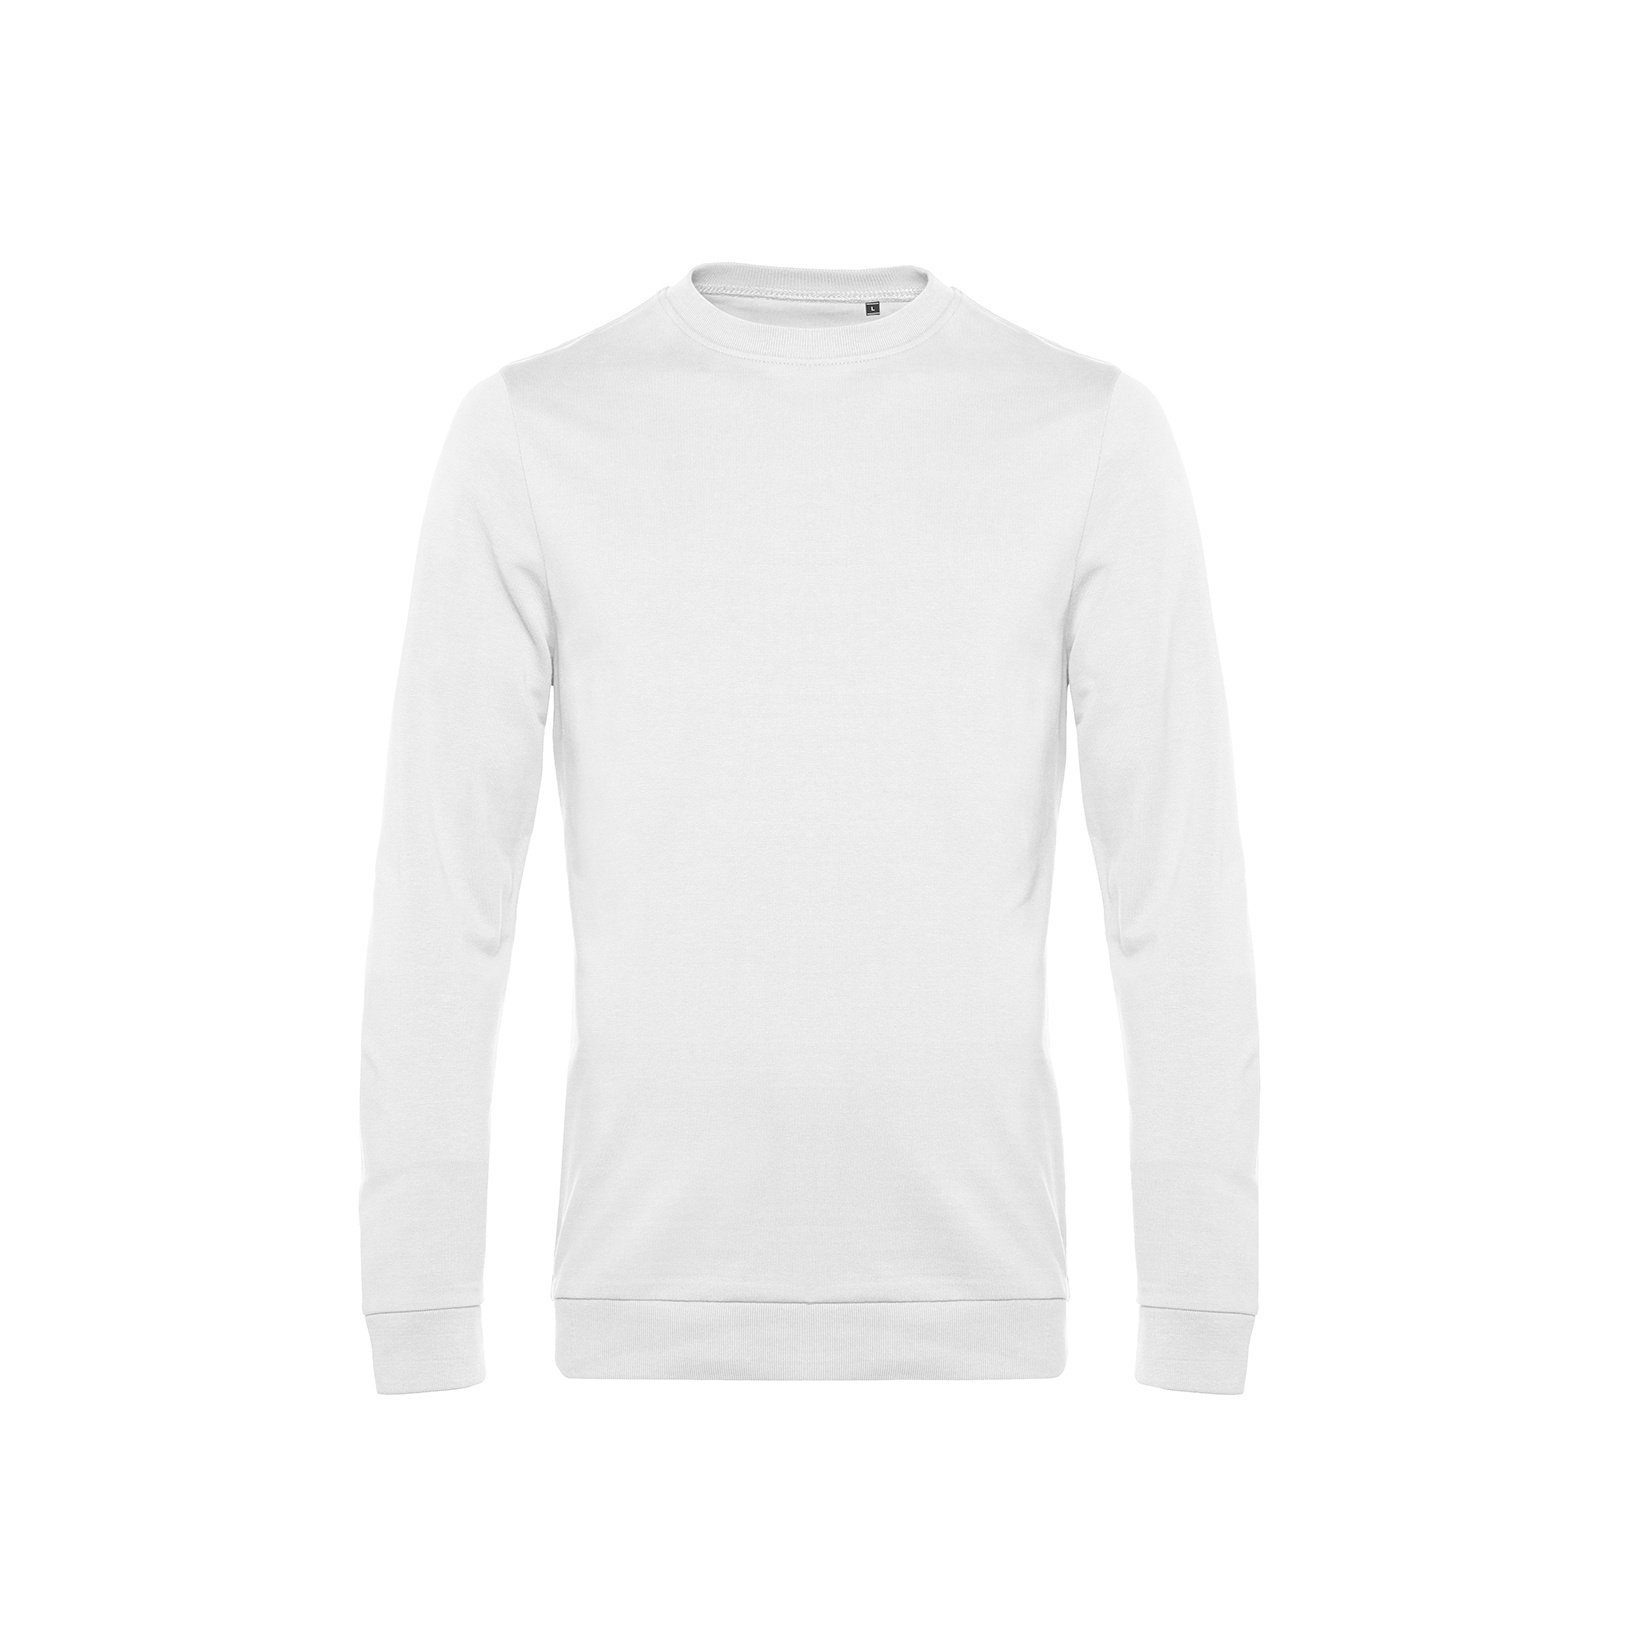 Selenzia Rundhalspullover Selenzia Herren Pullover Sweatshirt Sweater Pulli Weiß